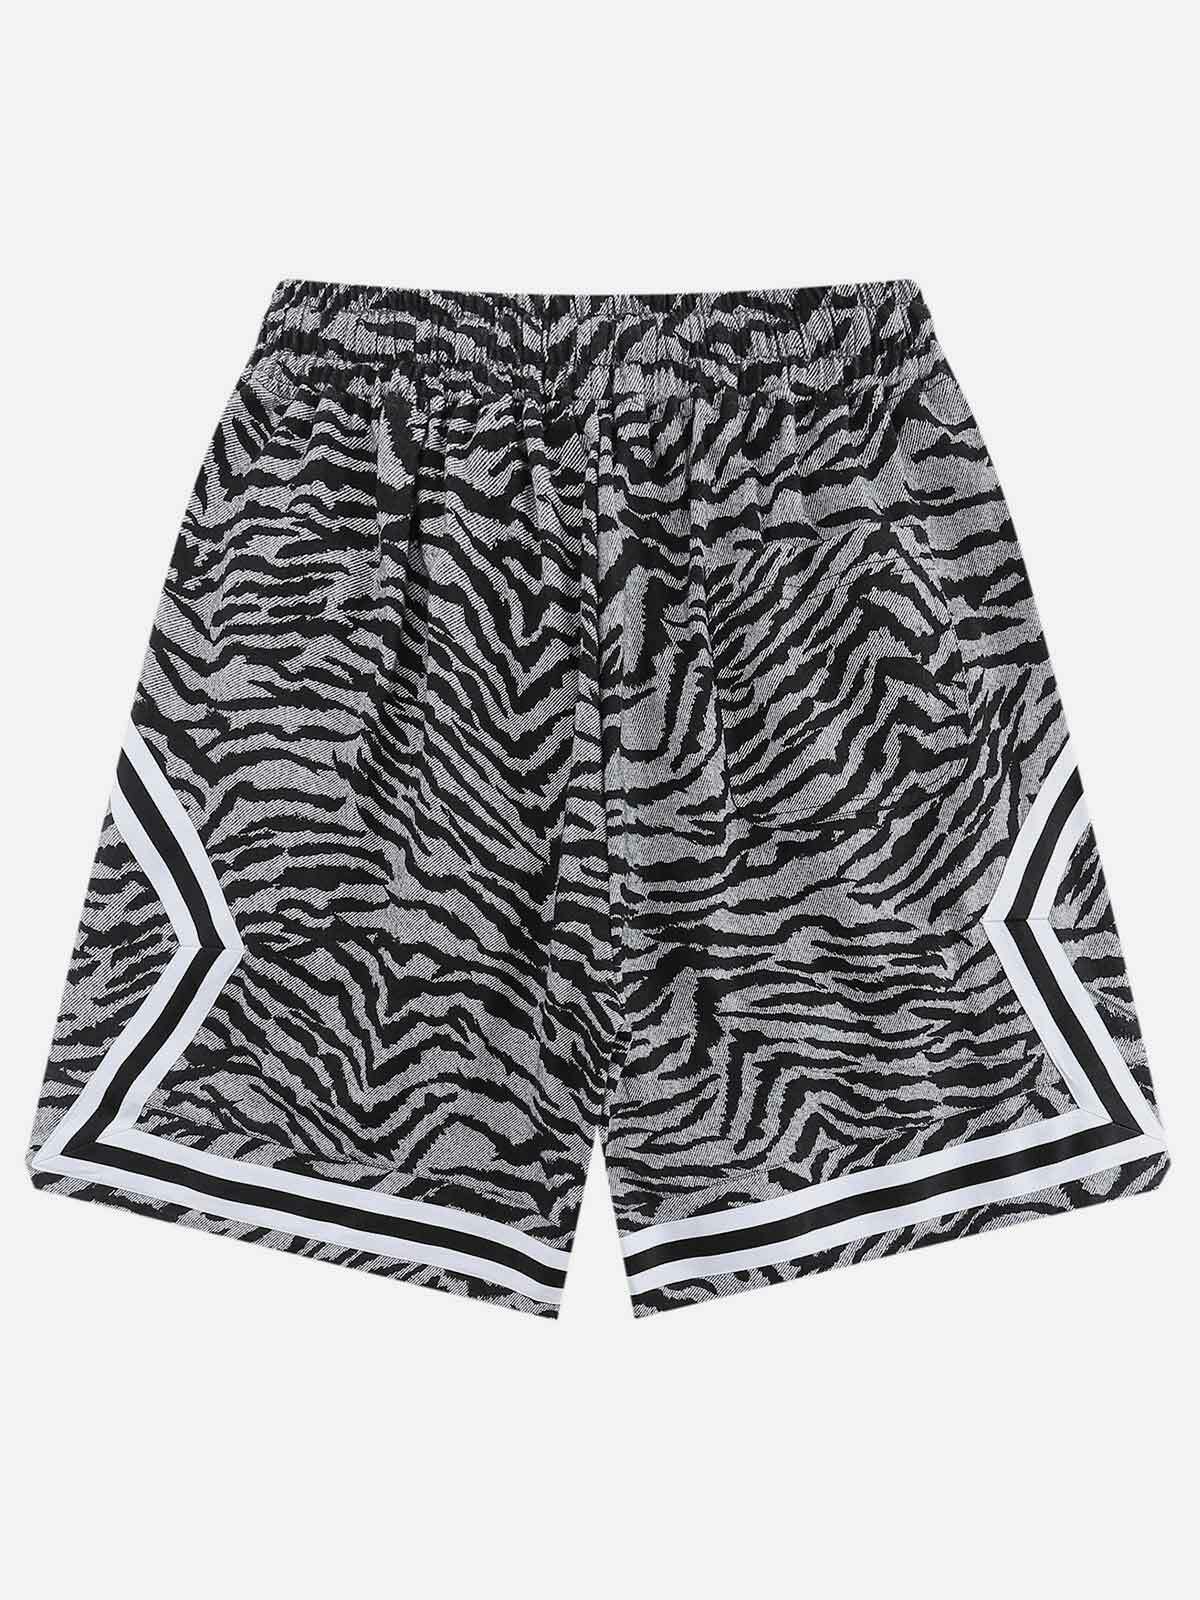 zebra alphabet embroidered shorts edgy & vibrant streetwear 7387